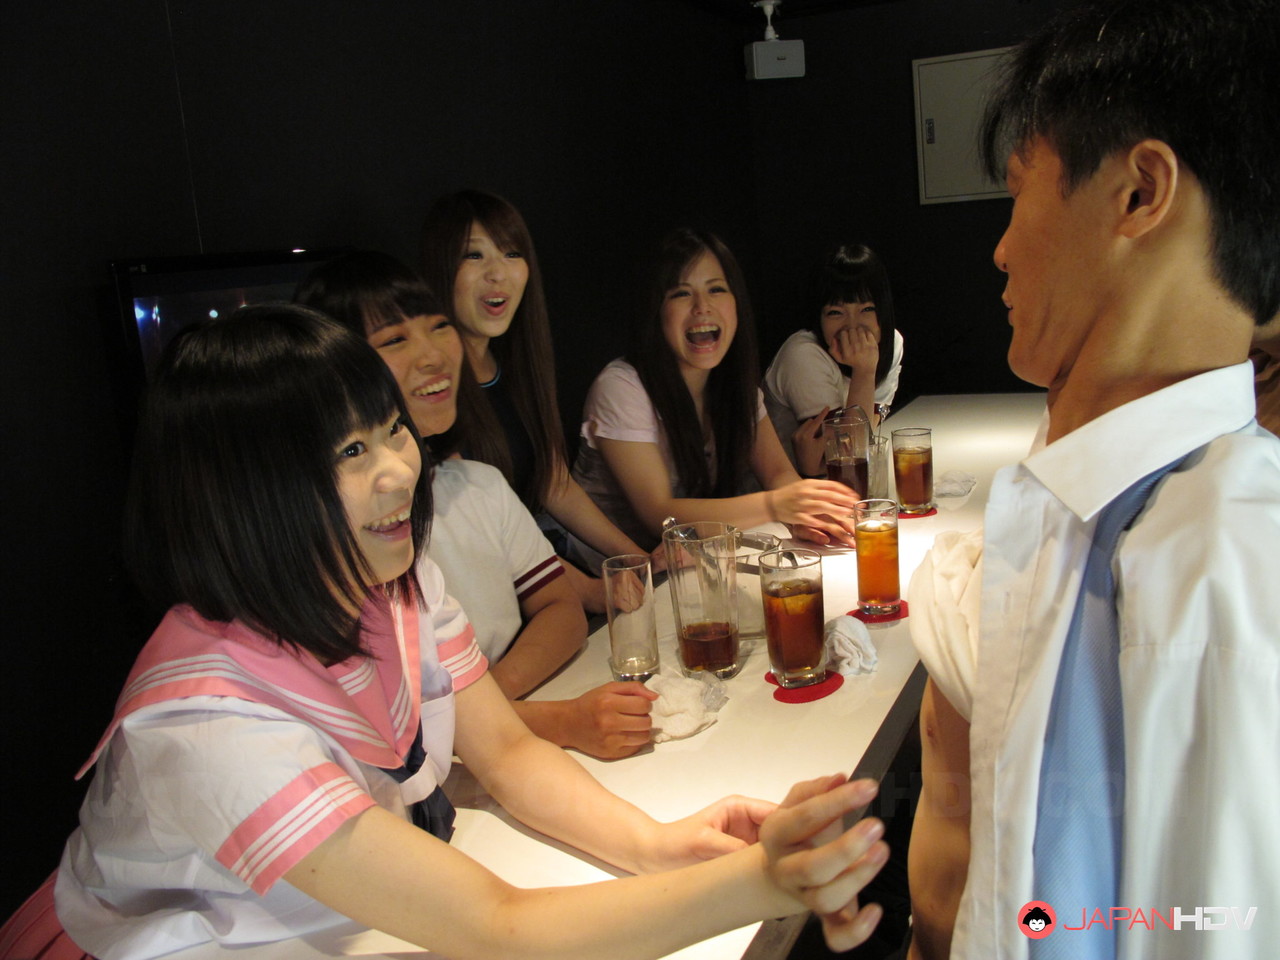 Asian cutie Mio Kosaki and her friends suck and jerk off dongs in a bar porno fotky #426551978 | Japan HDV Pics, Mio Kosaki, Seiko Ida, Yuri Sakura, Japanese, mobilní porno